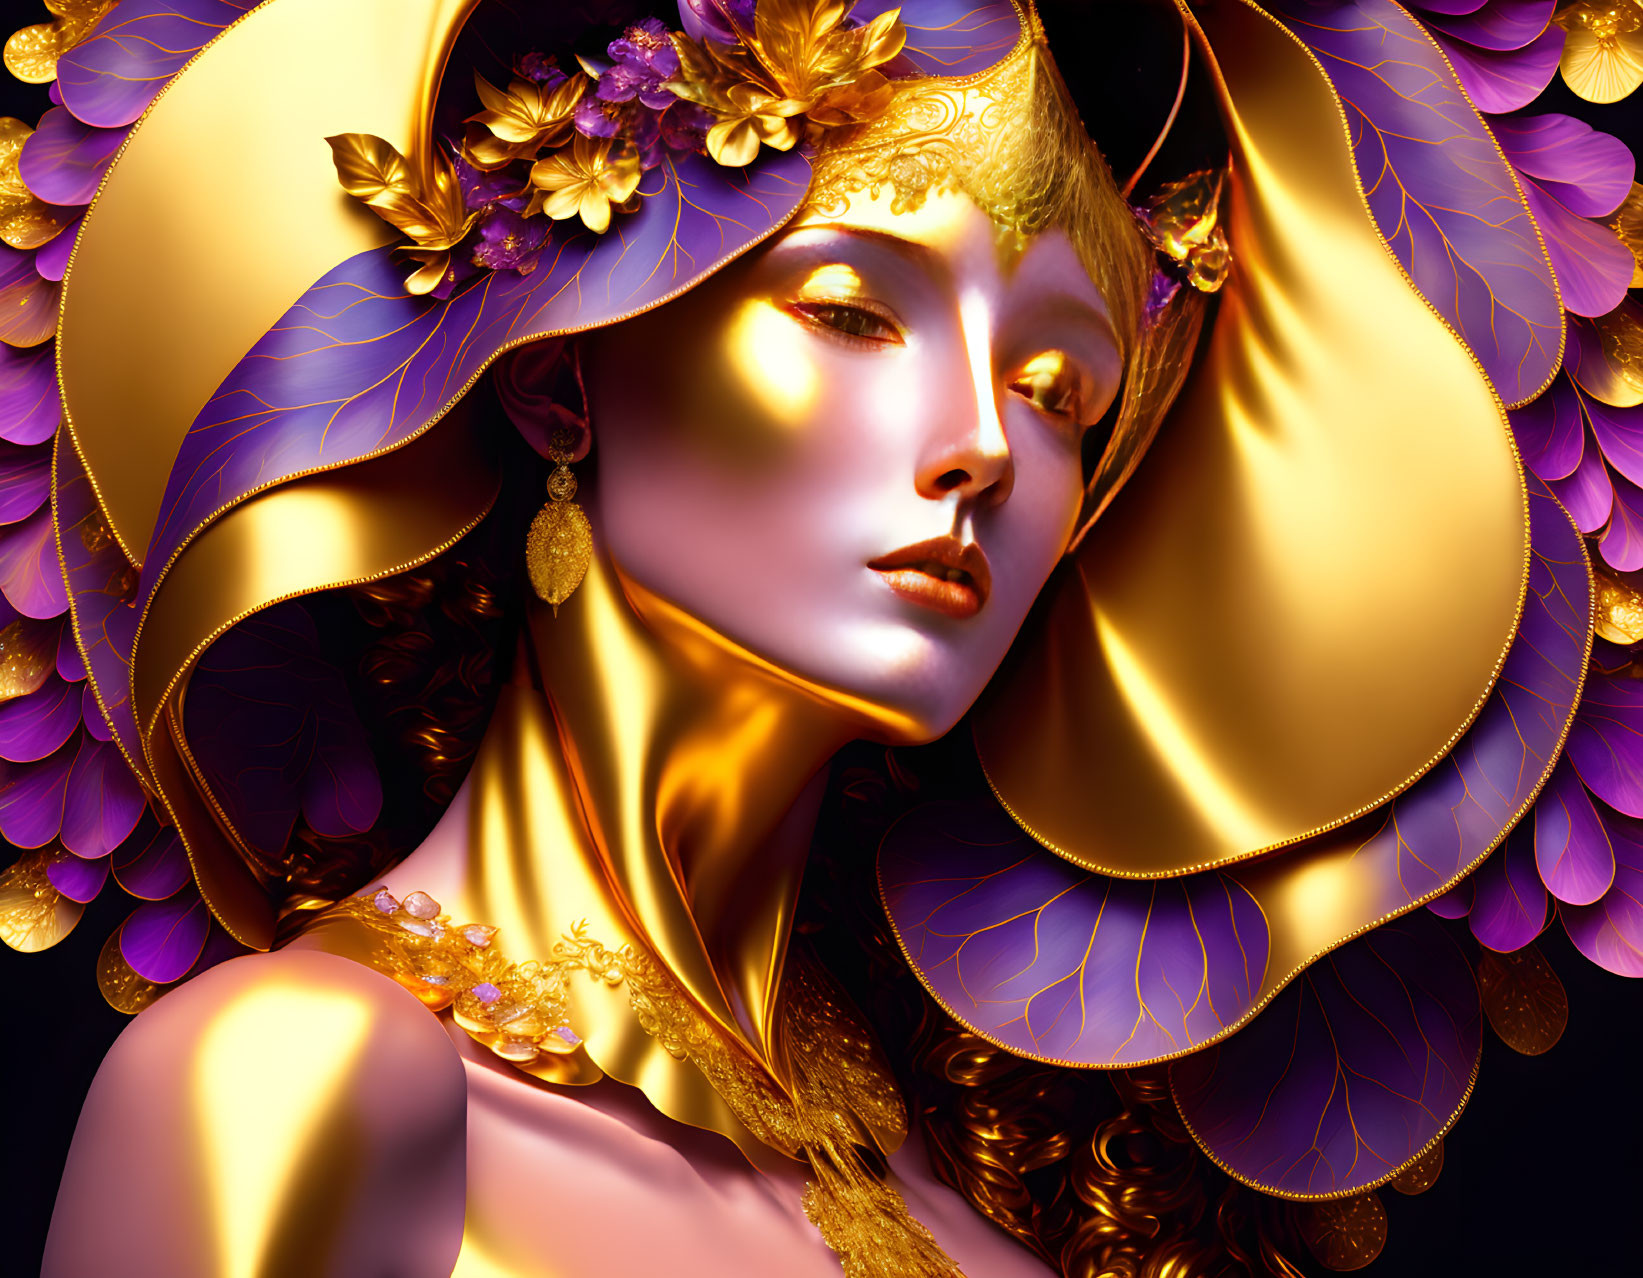 Digital artwork of woman in golden attire with floral details on dark background